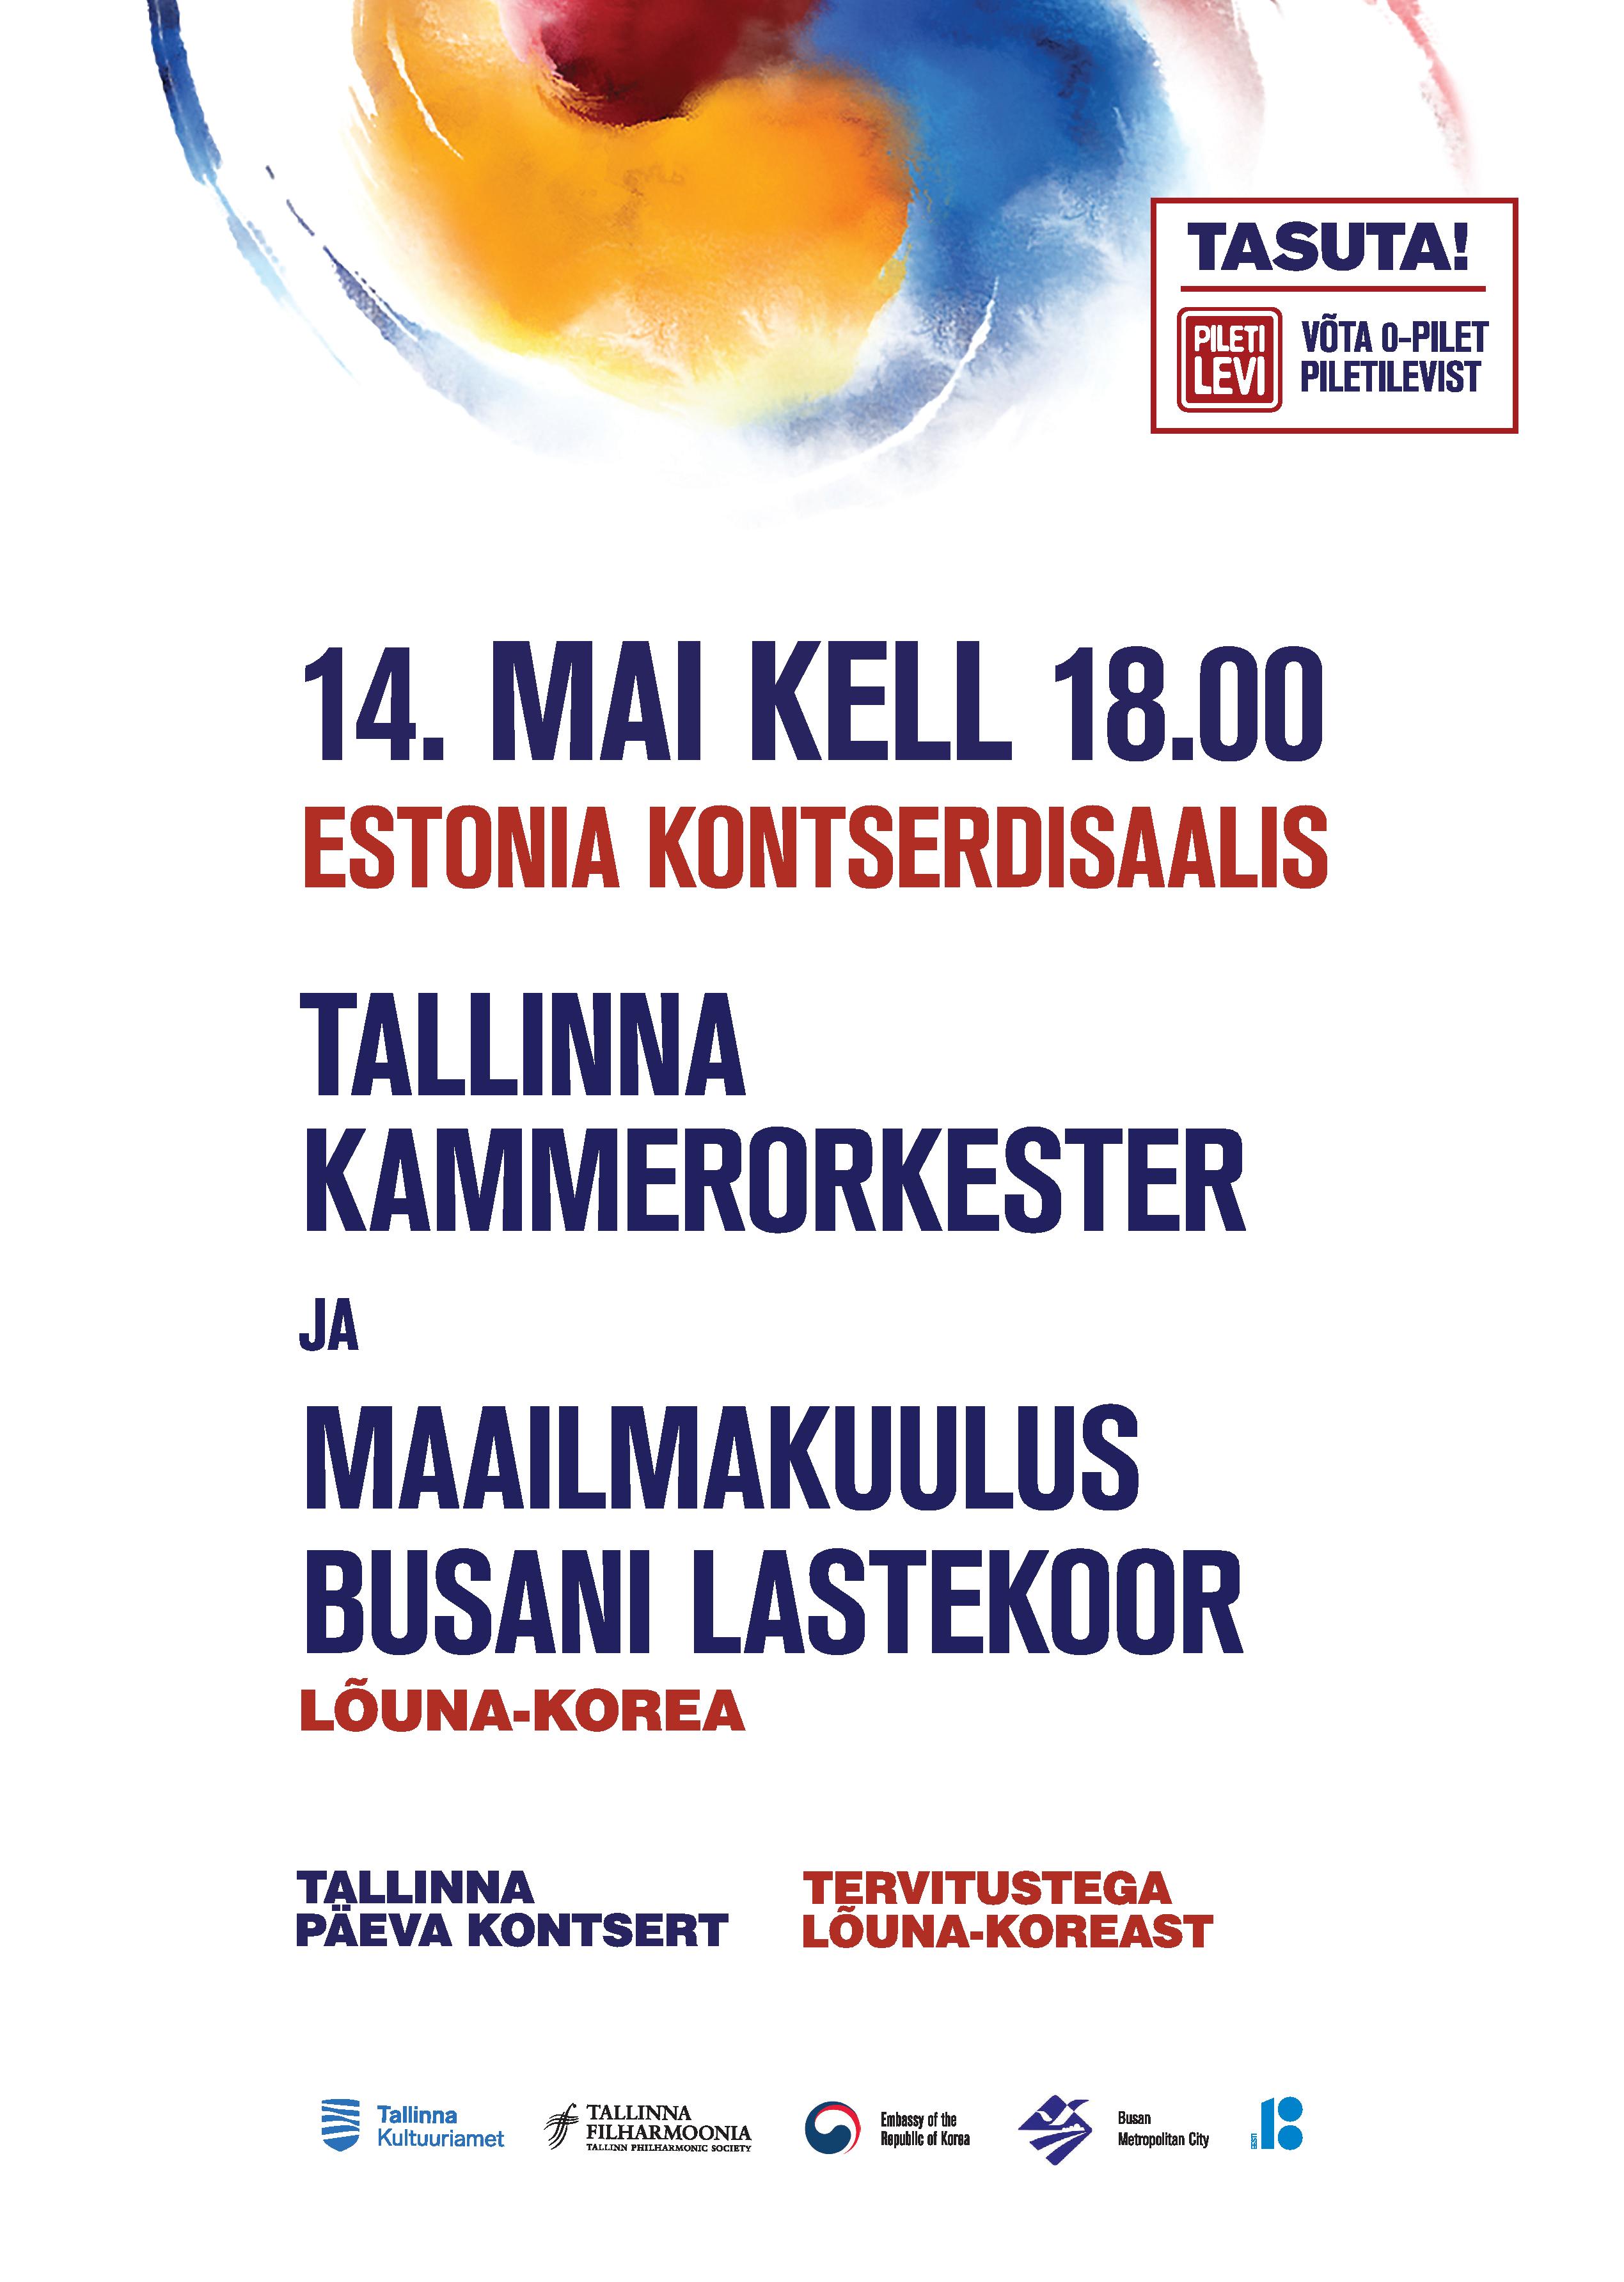 Tallinn Day Concert: Greetins from the Republic of Korea